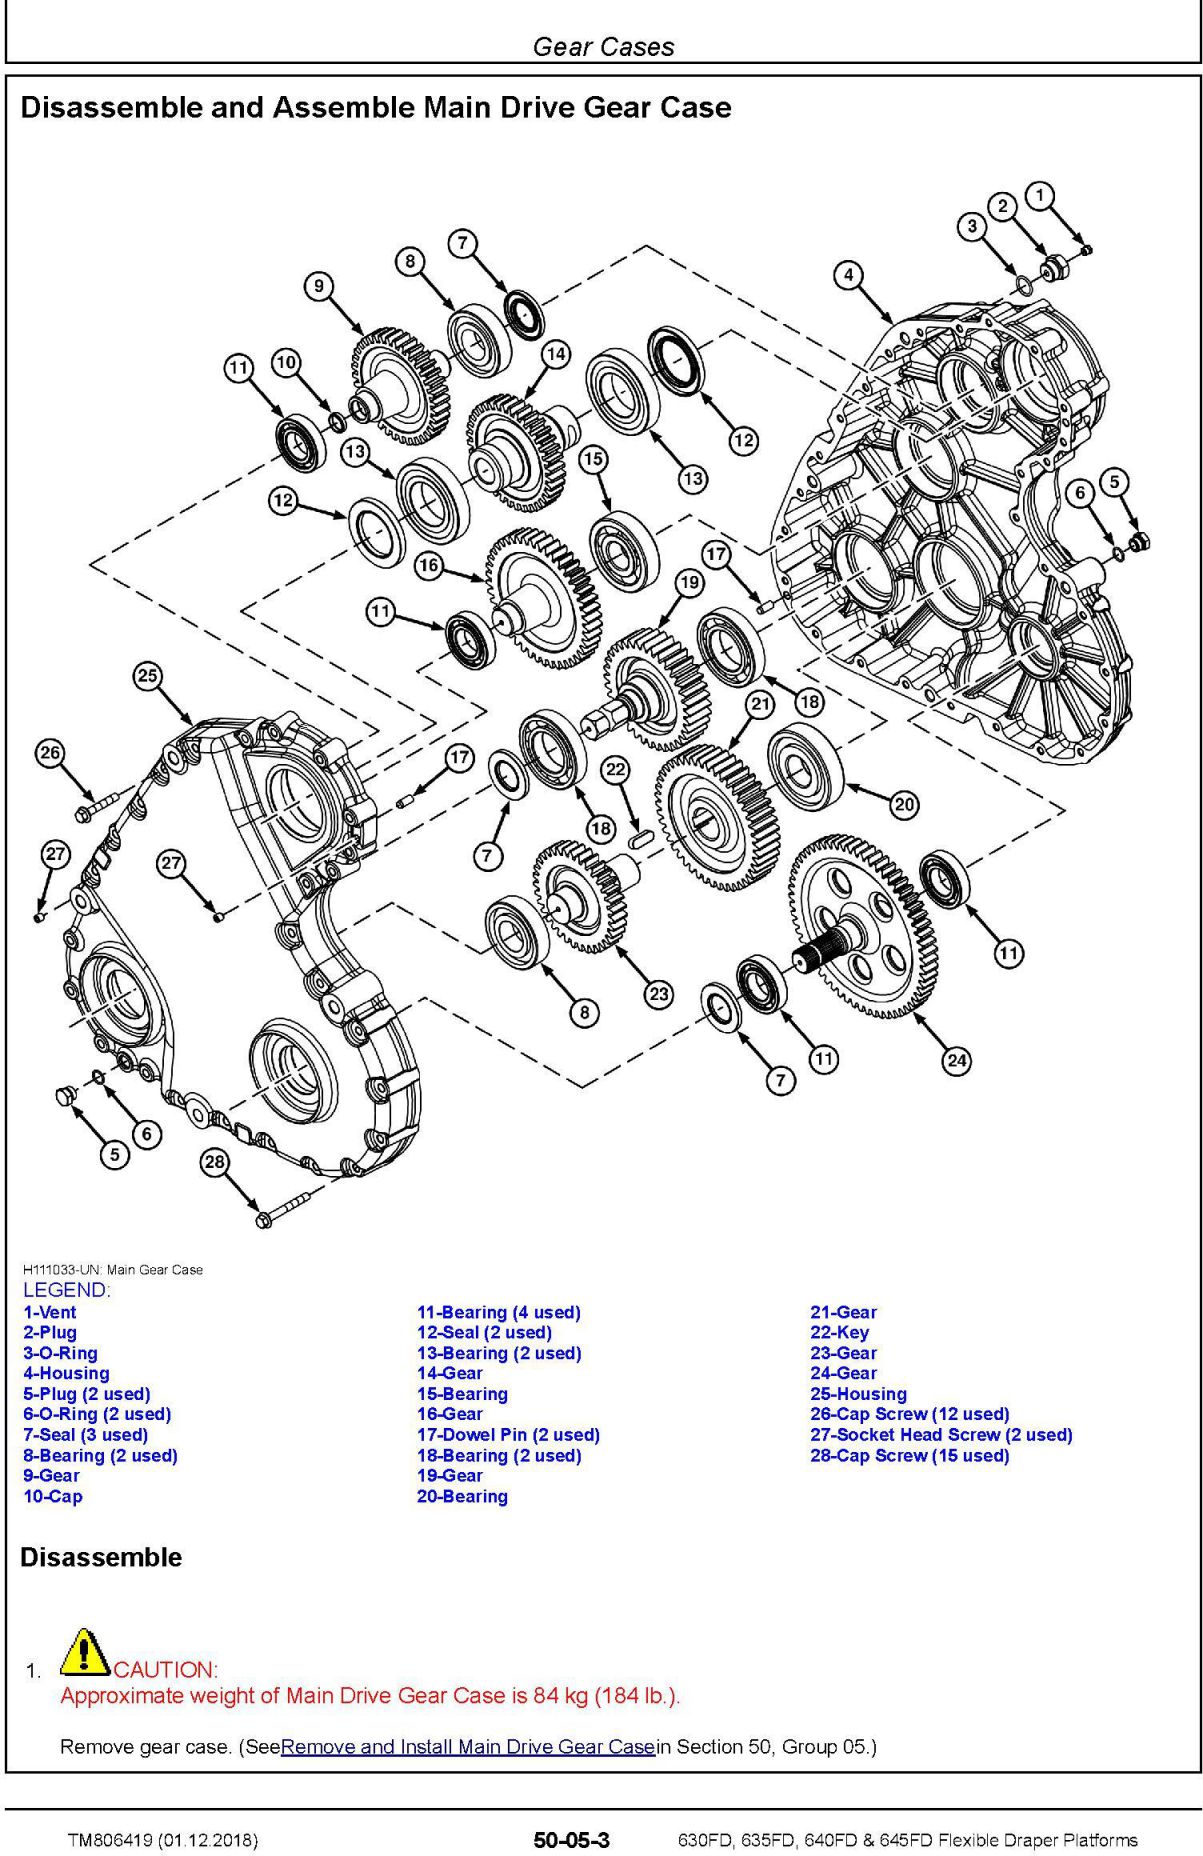 John Deere 630FD to 645FD Flexible Draper Platform Technical Manual TM806419_1